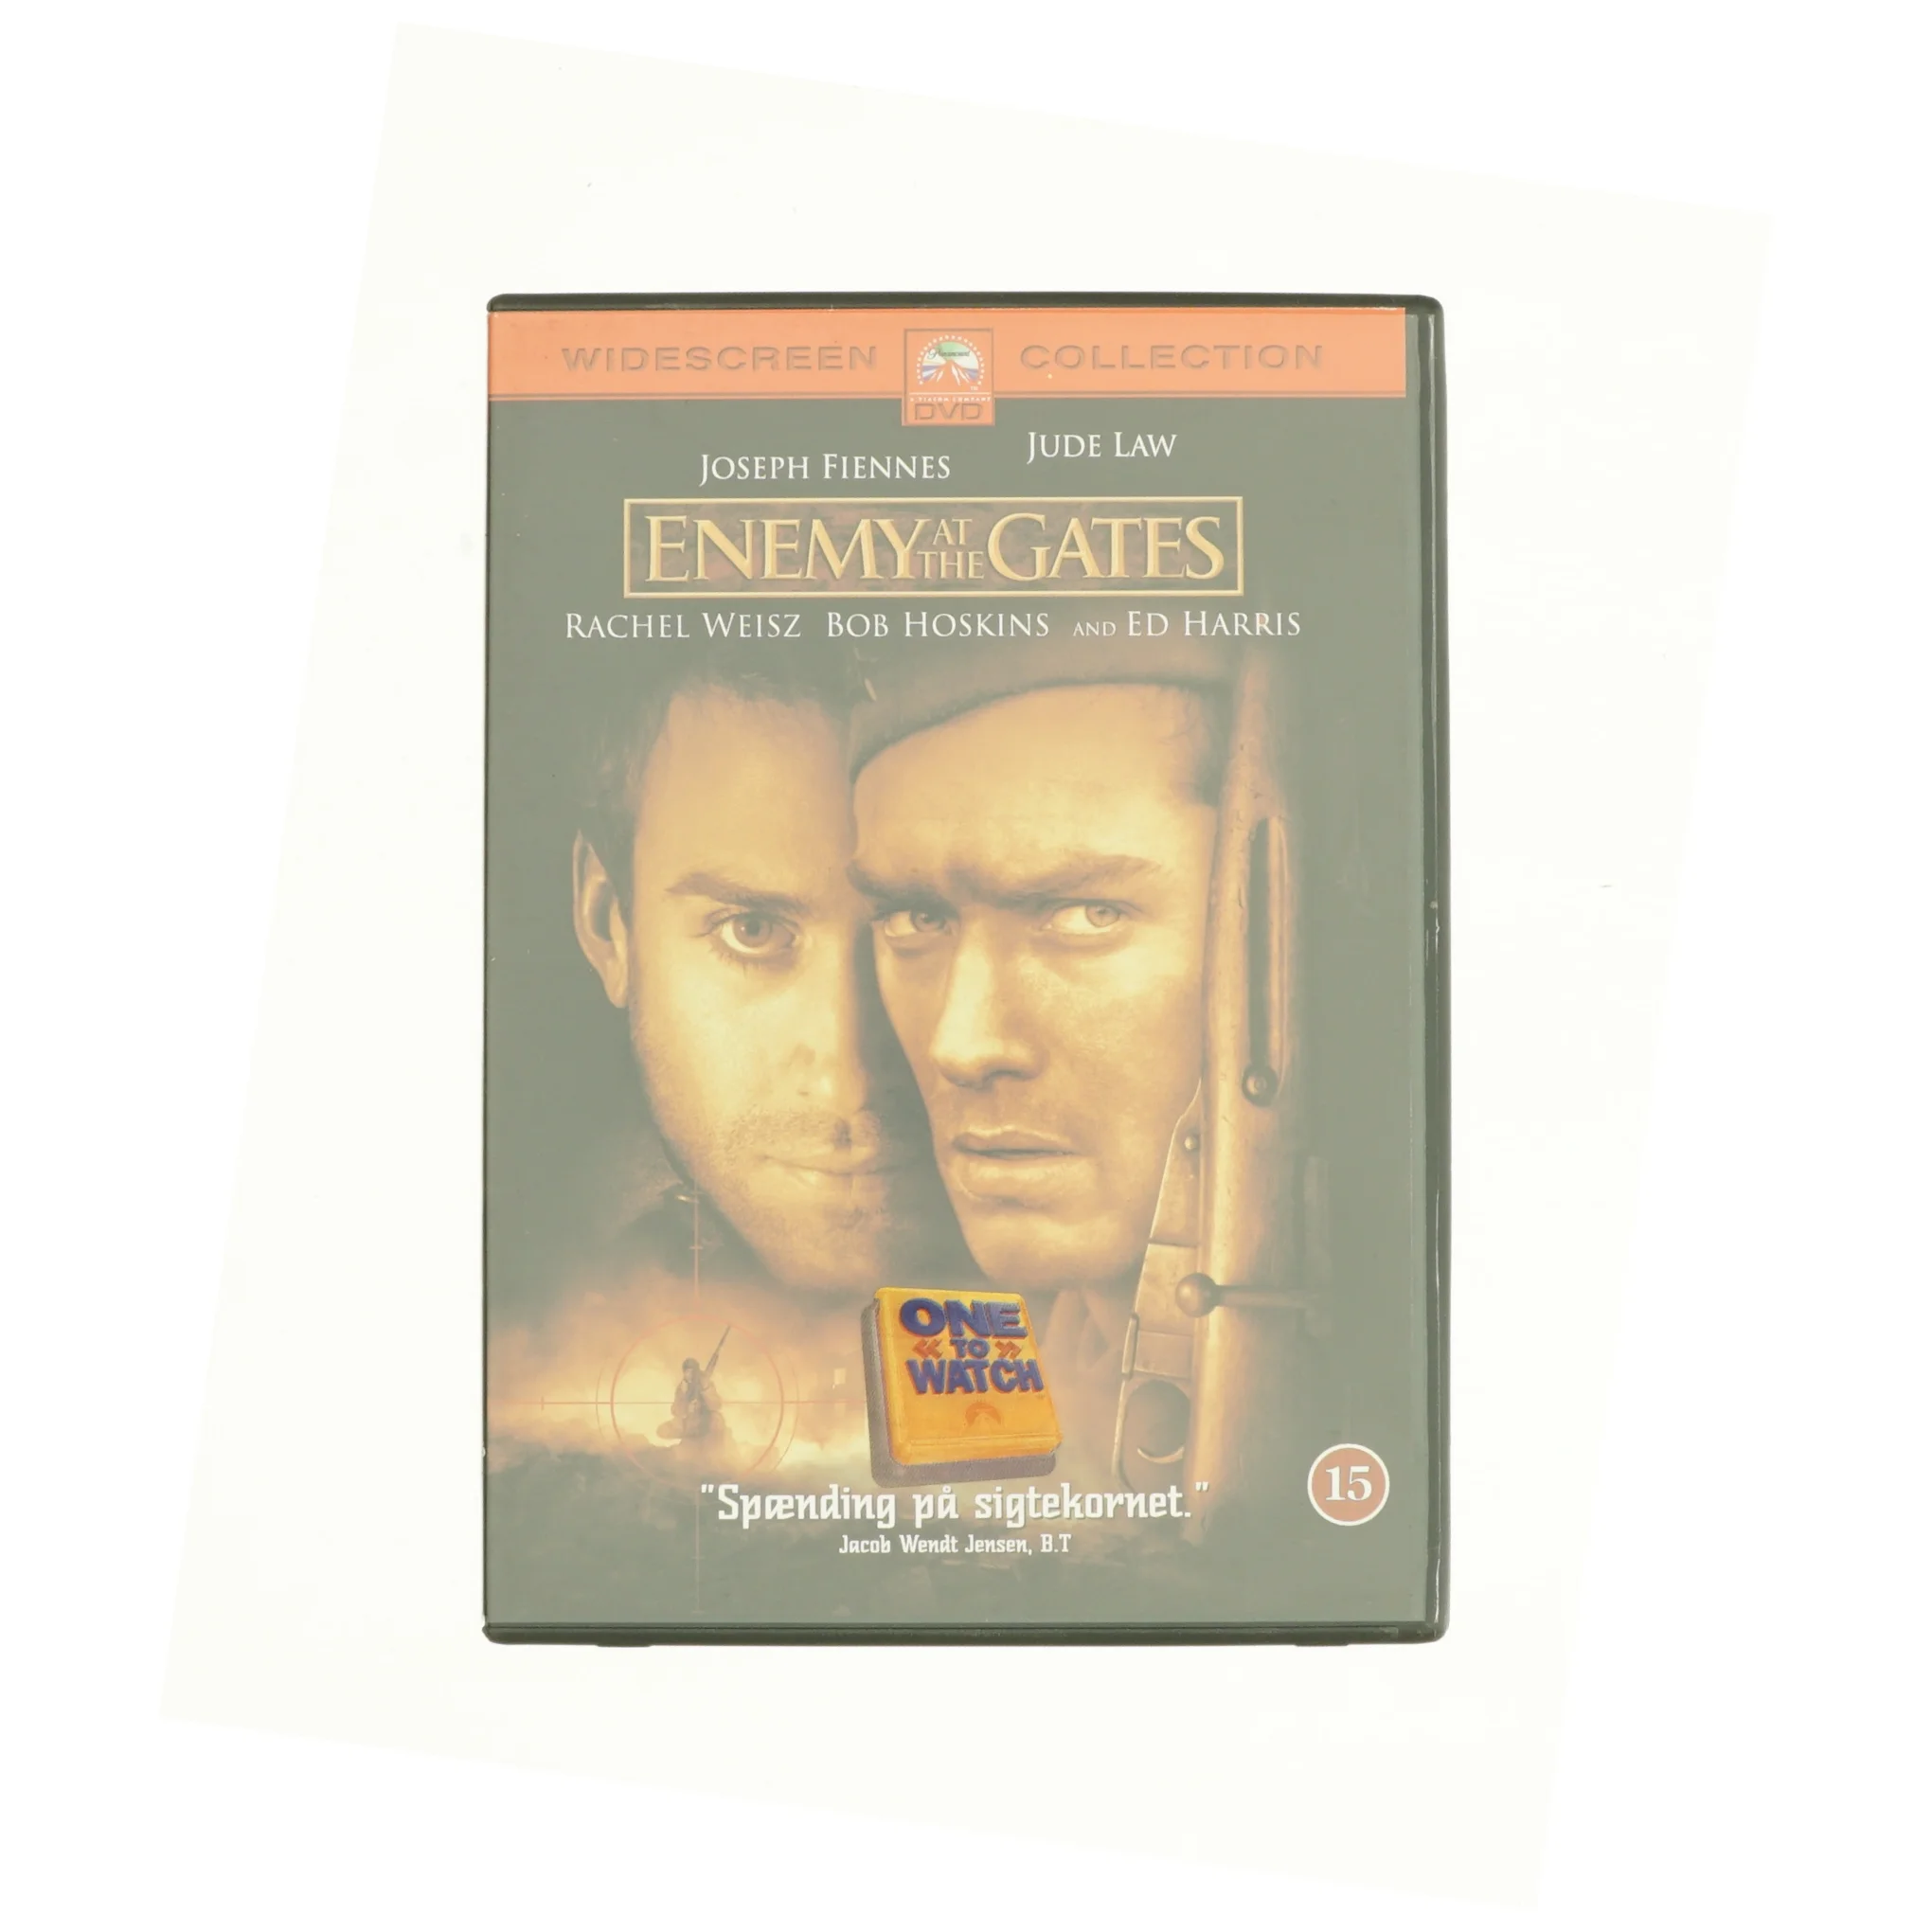 linned segment Deqenereret Side 140 - FIlm (DVD og Blu-ray) | Orderly.shop